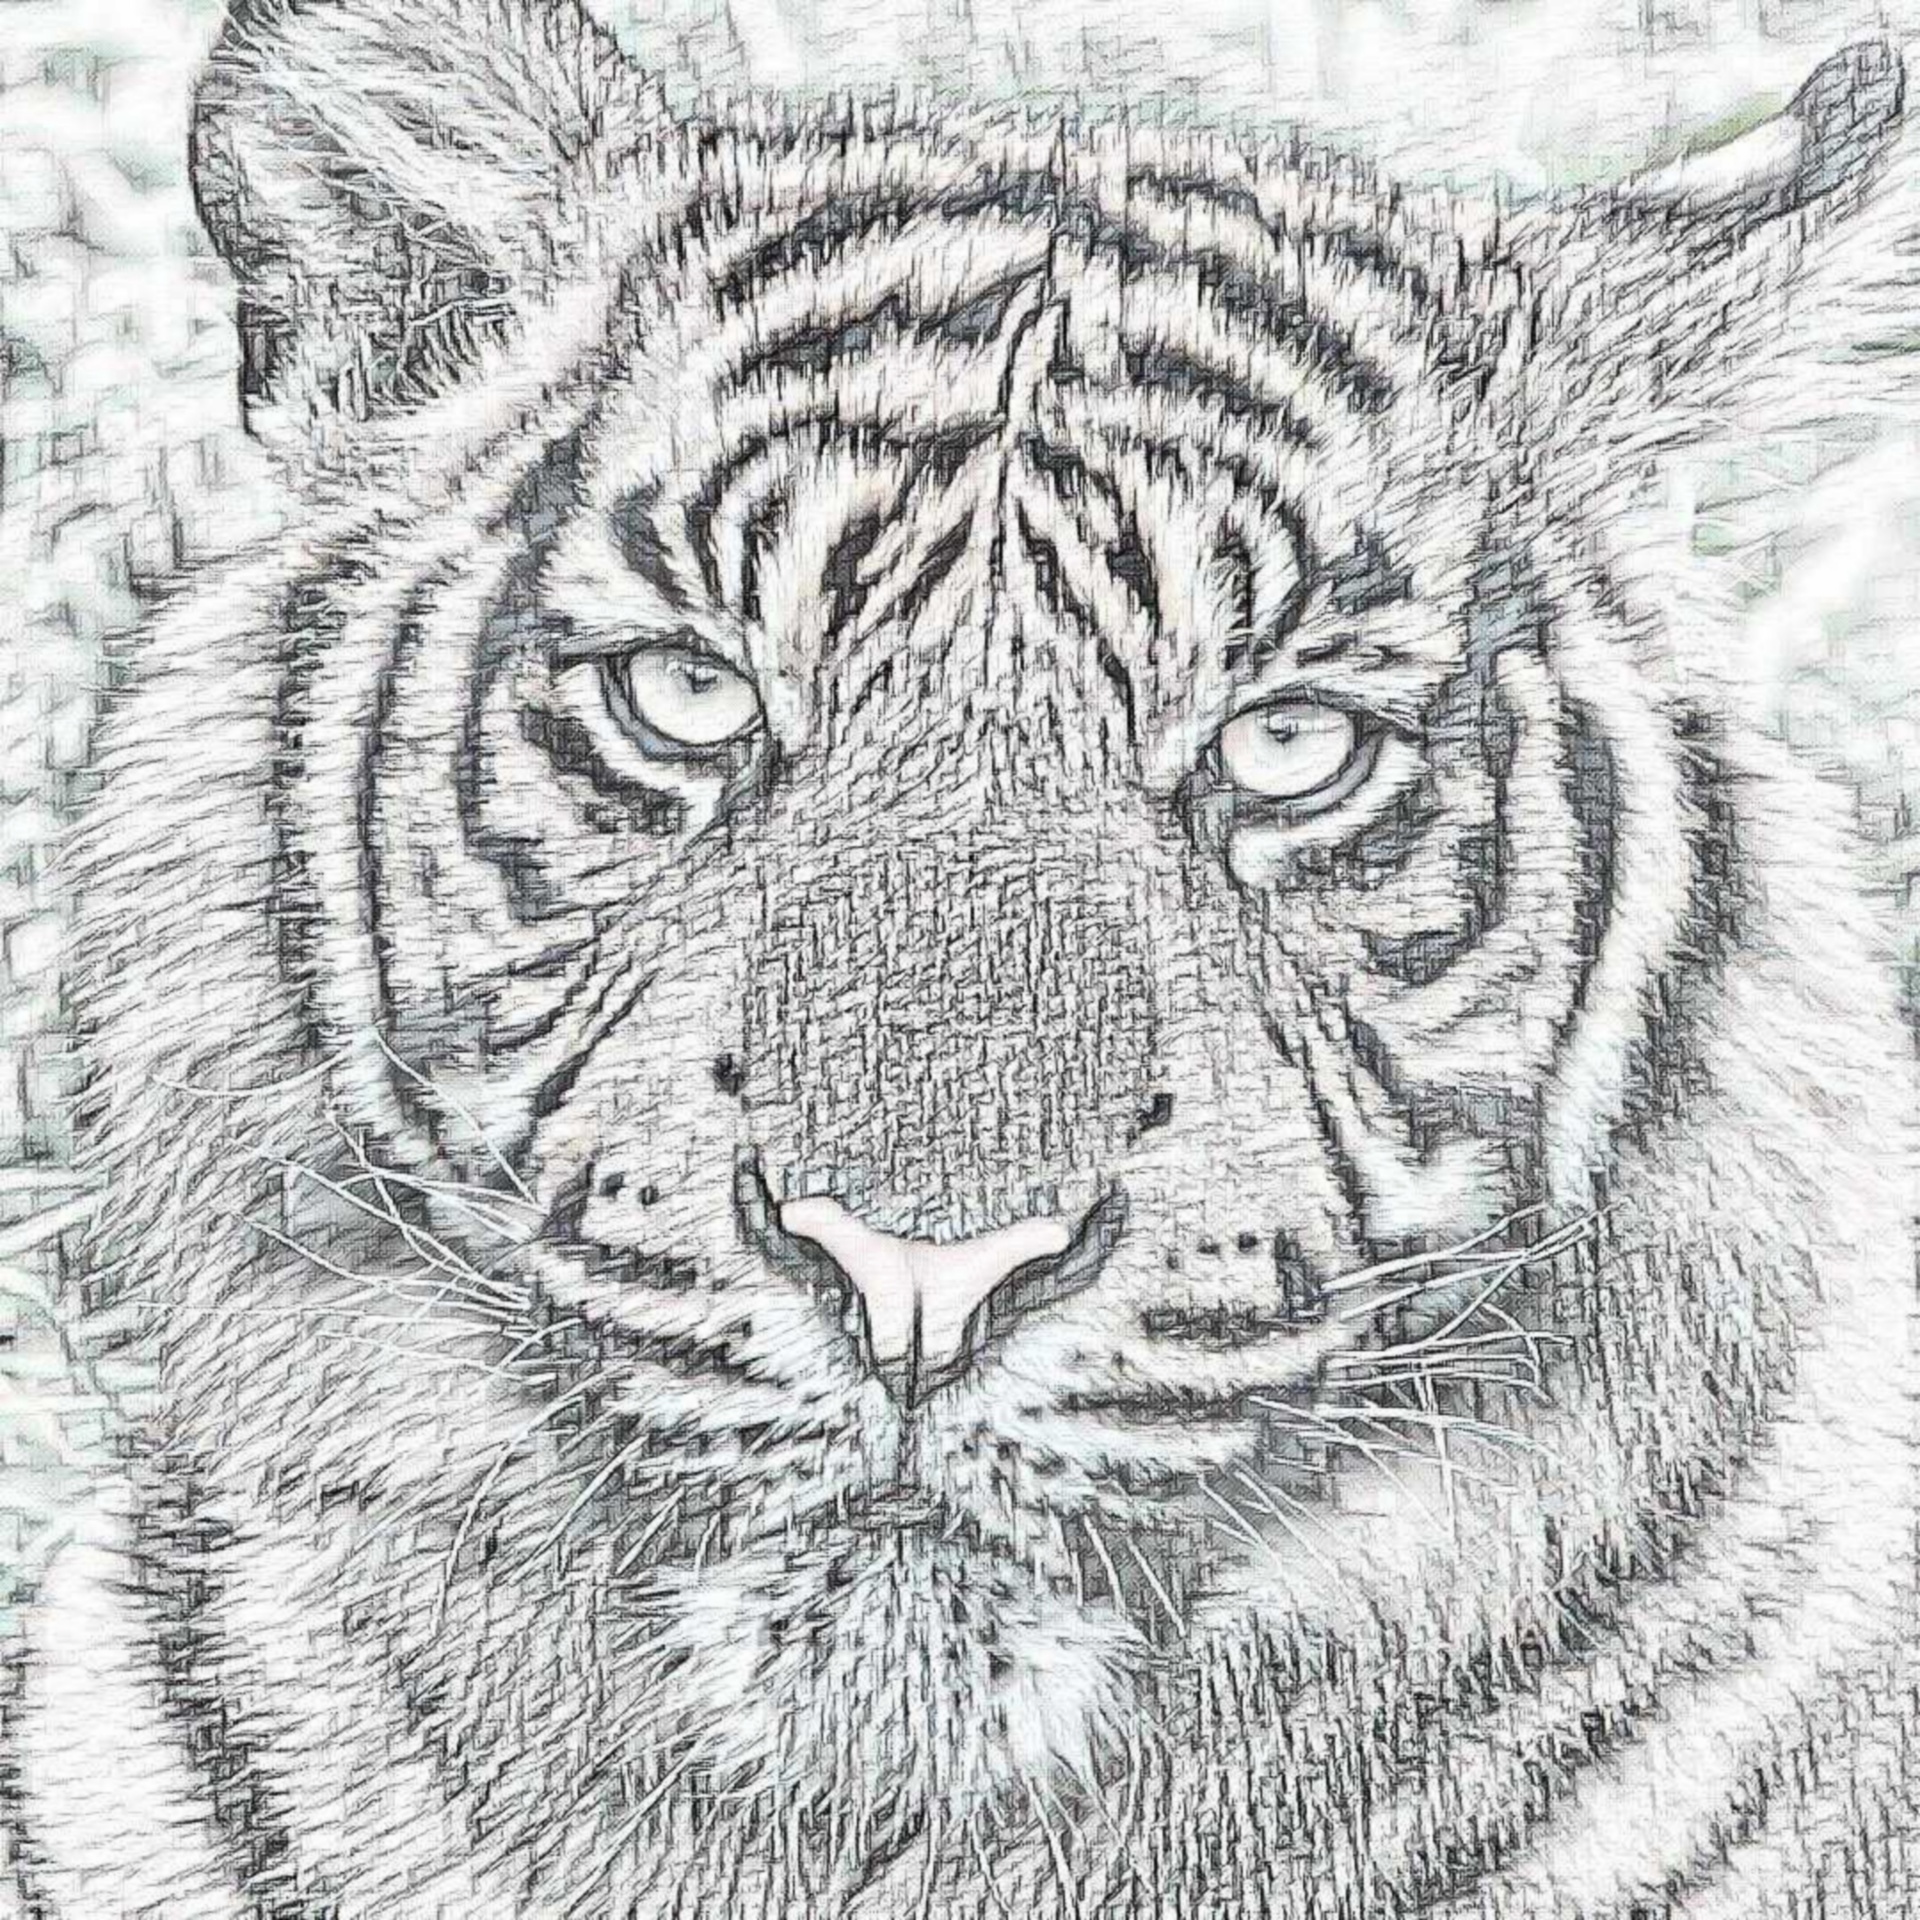 Tiger Pencil Drawing